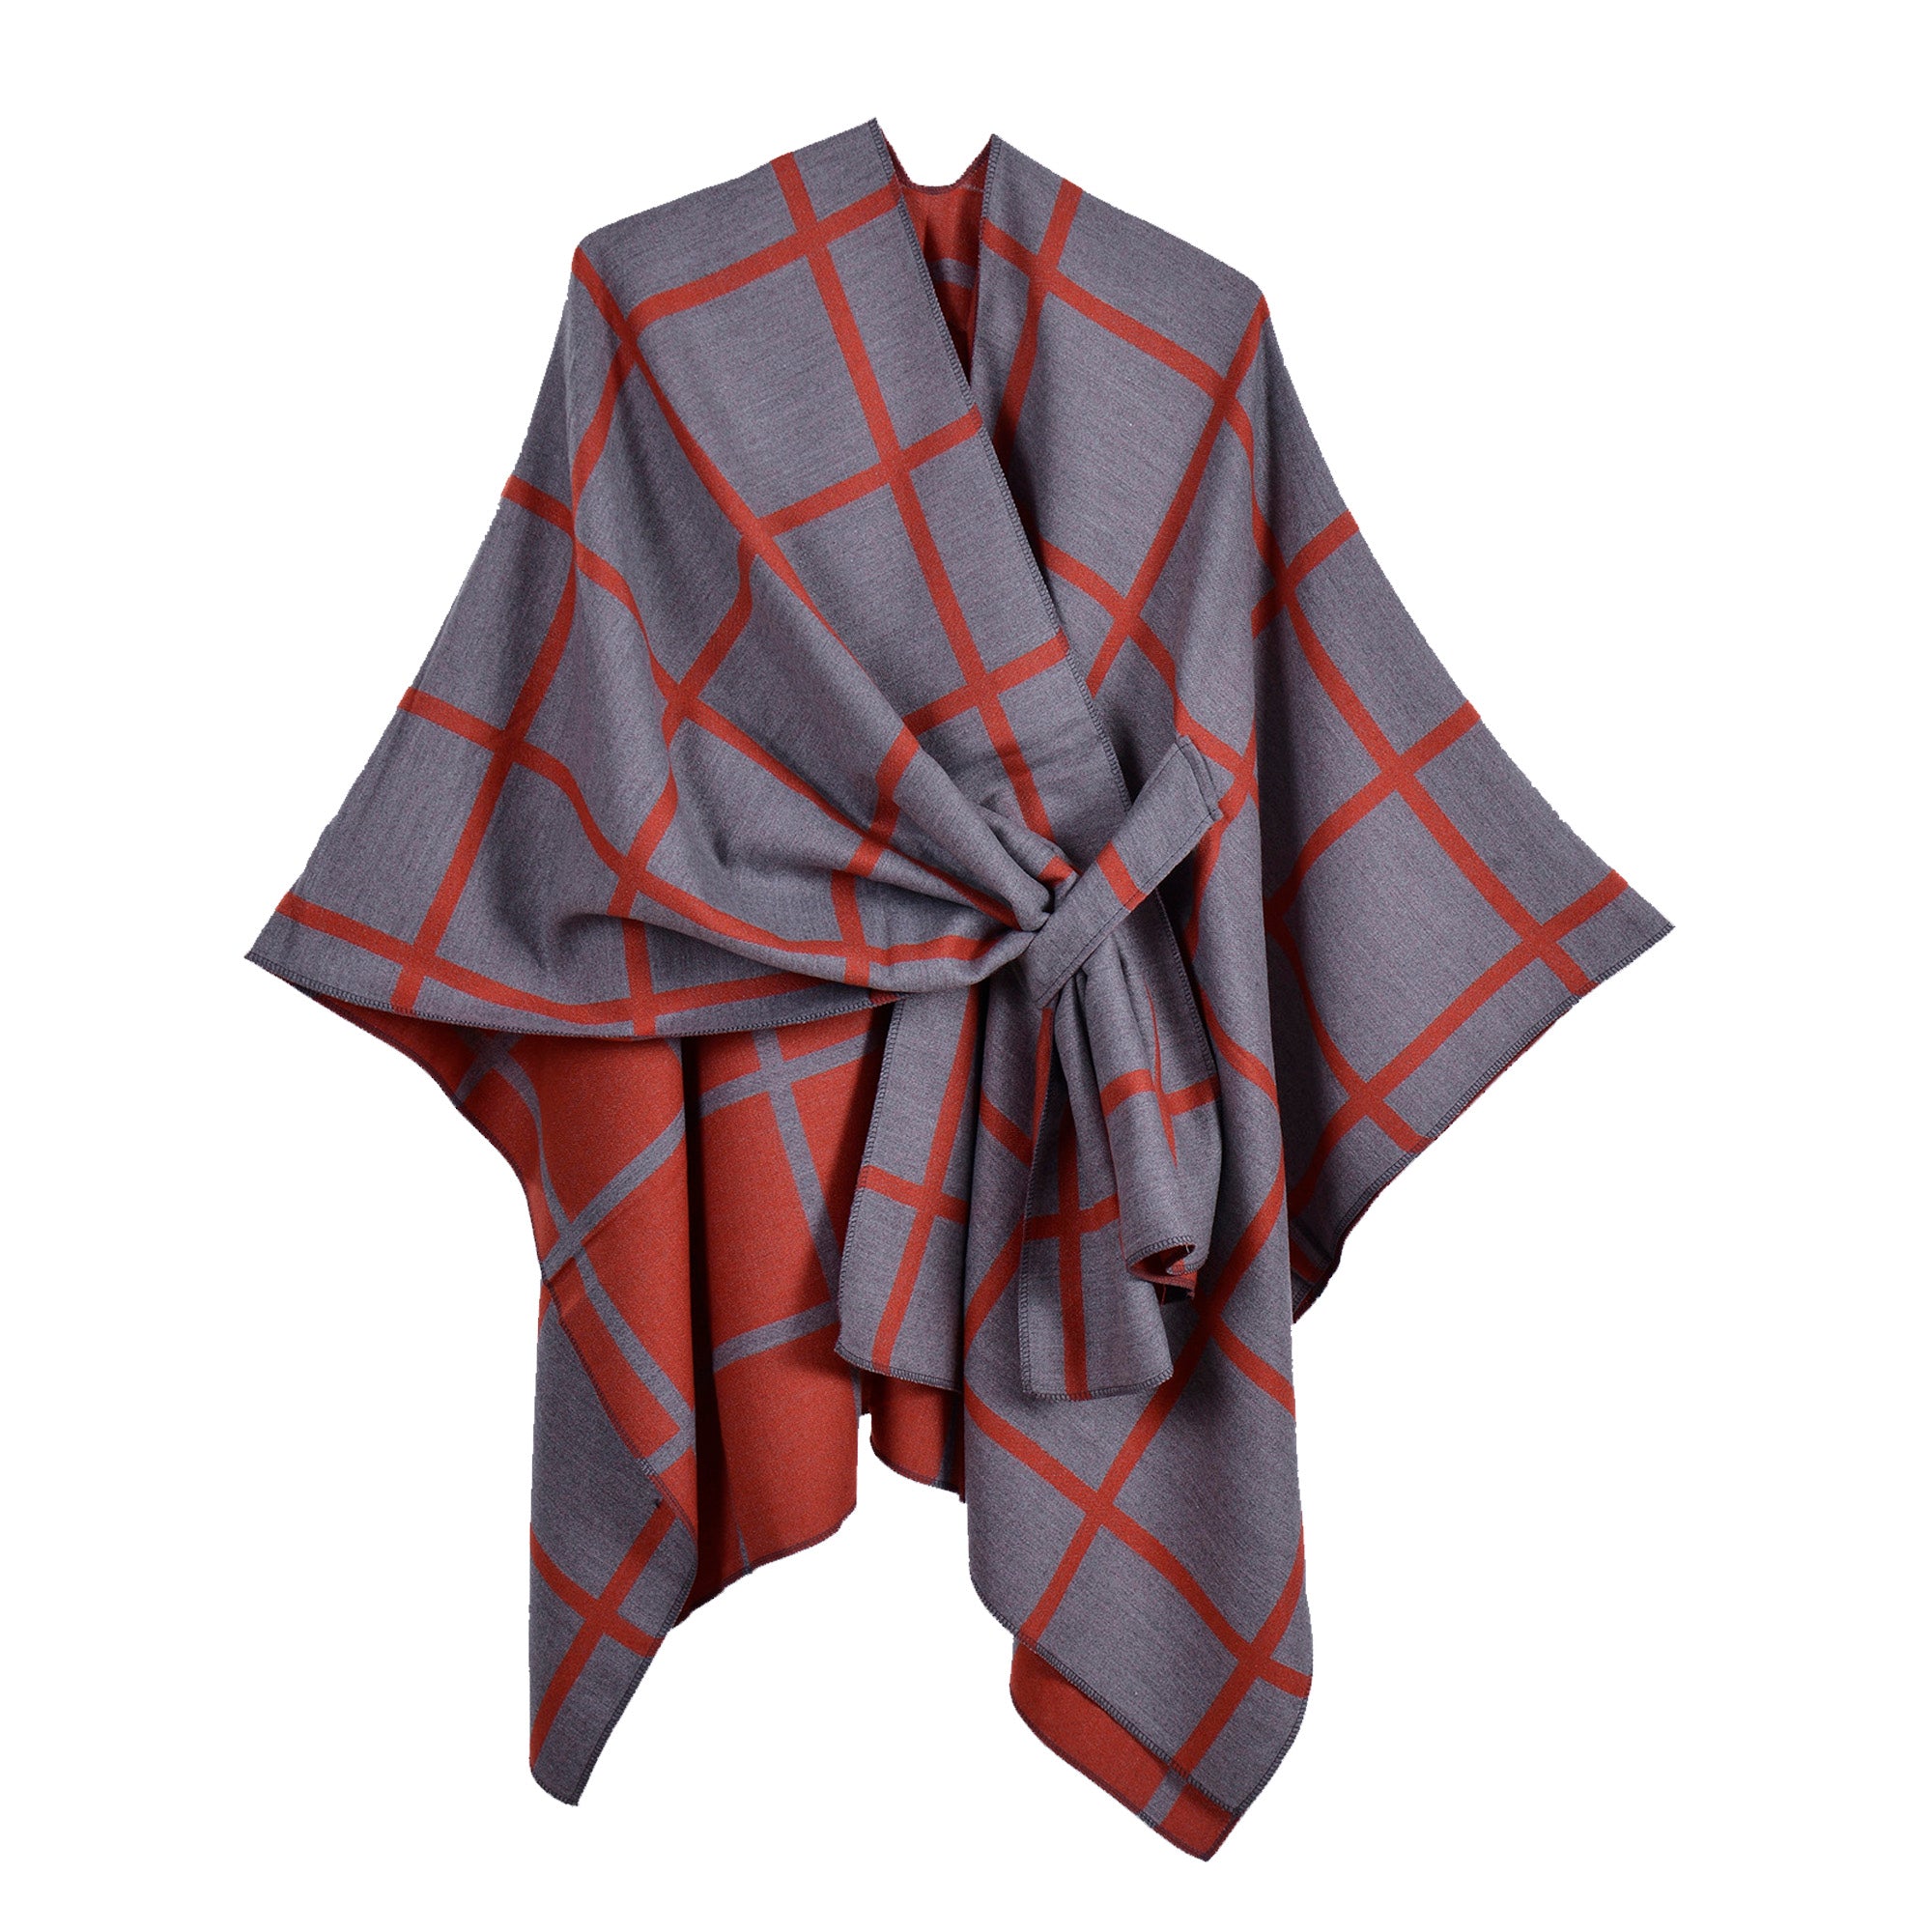 New plaid shawl with bar gray orange